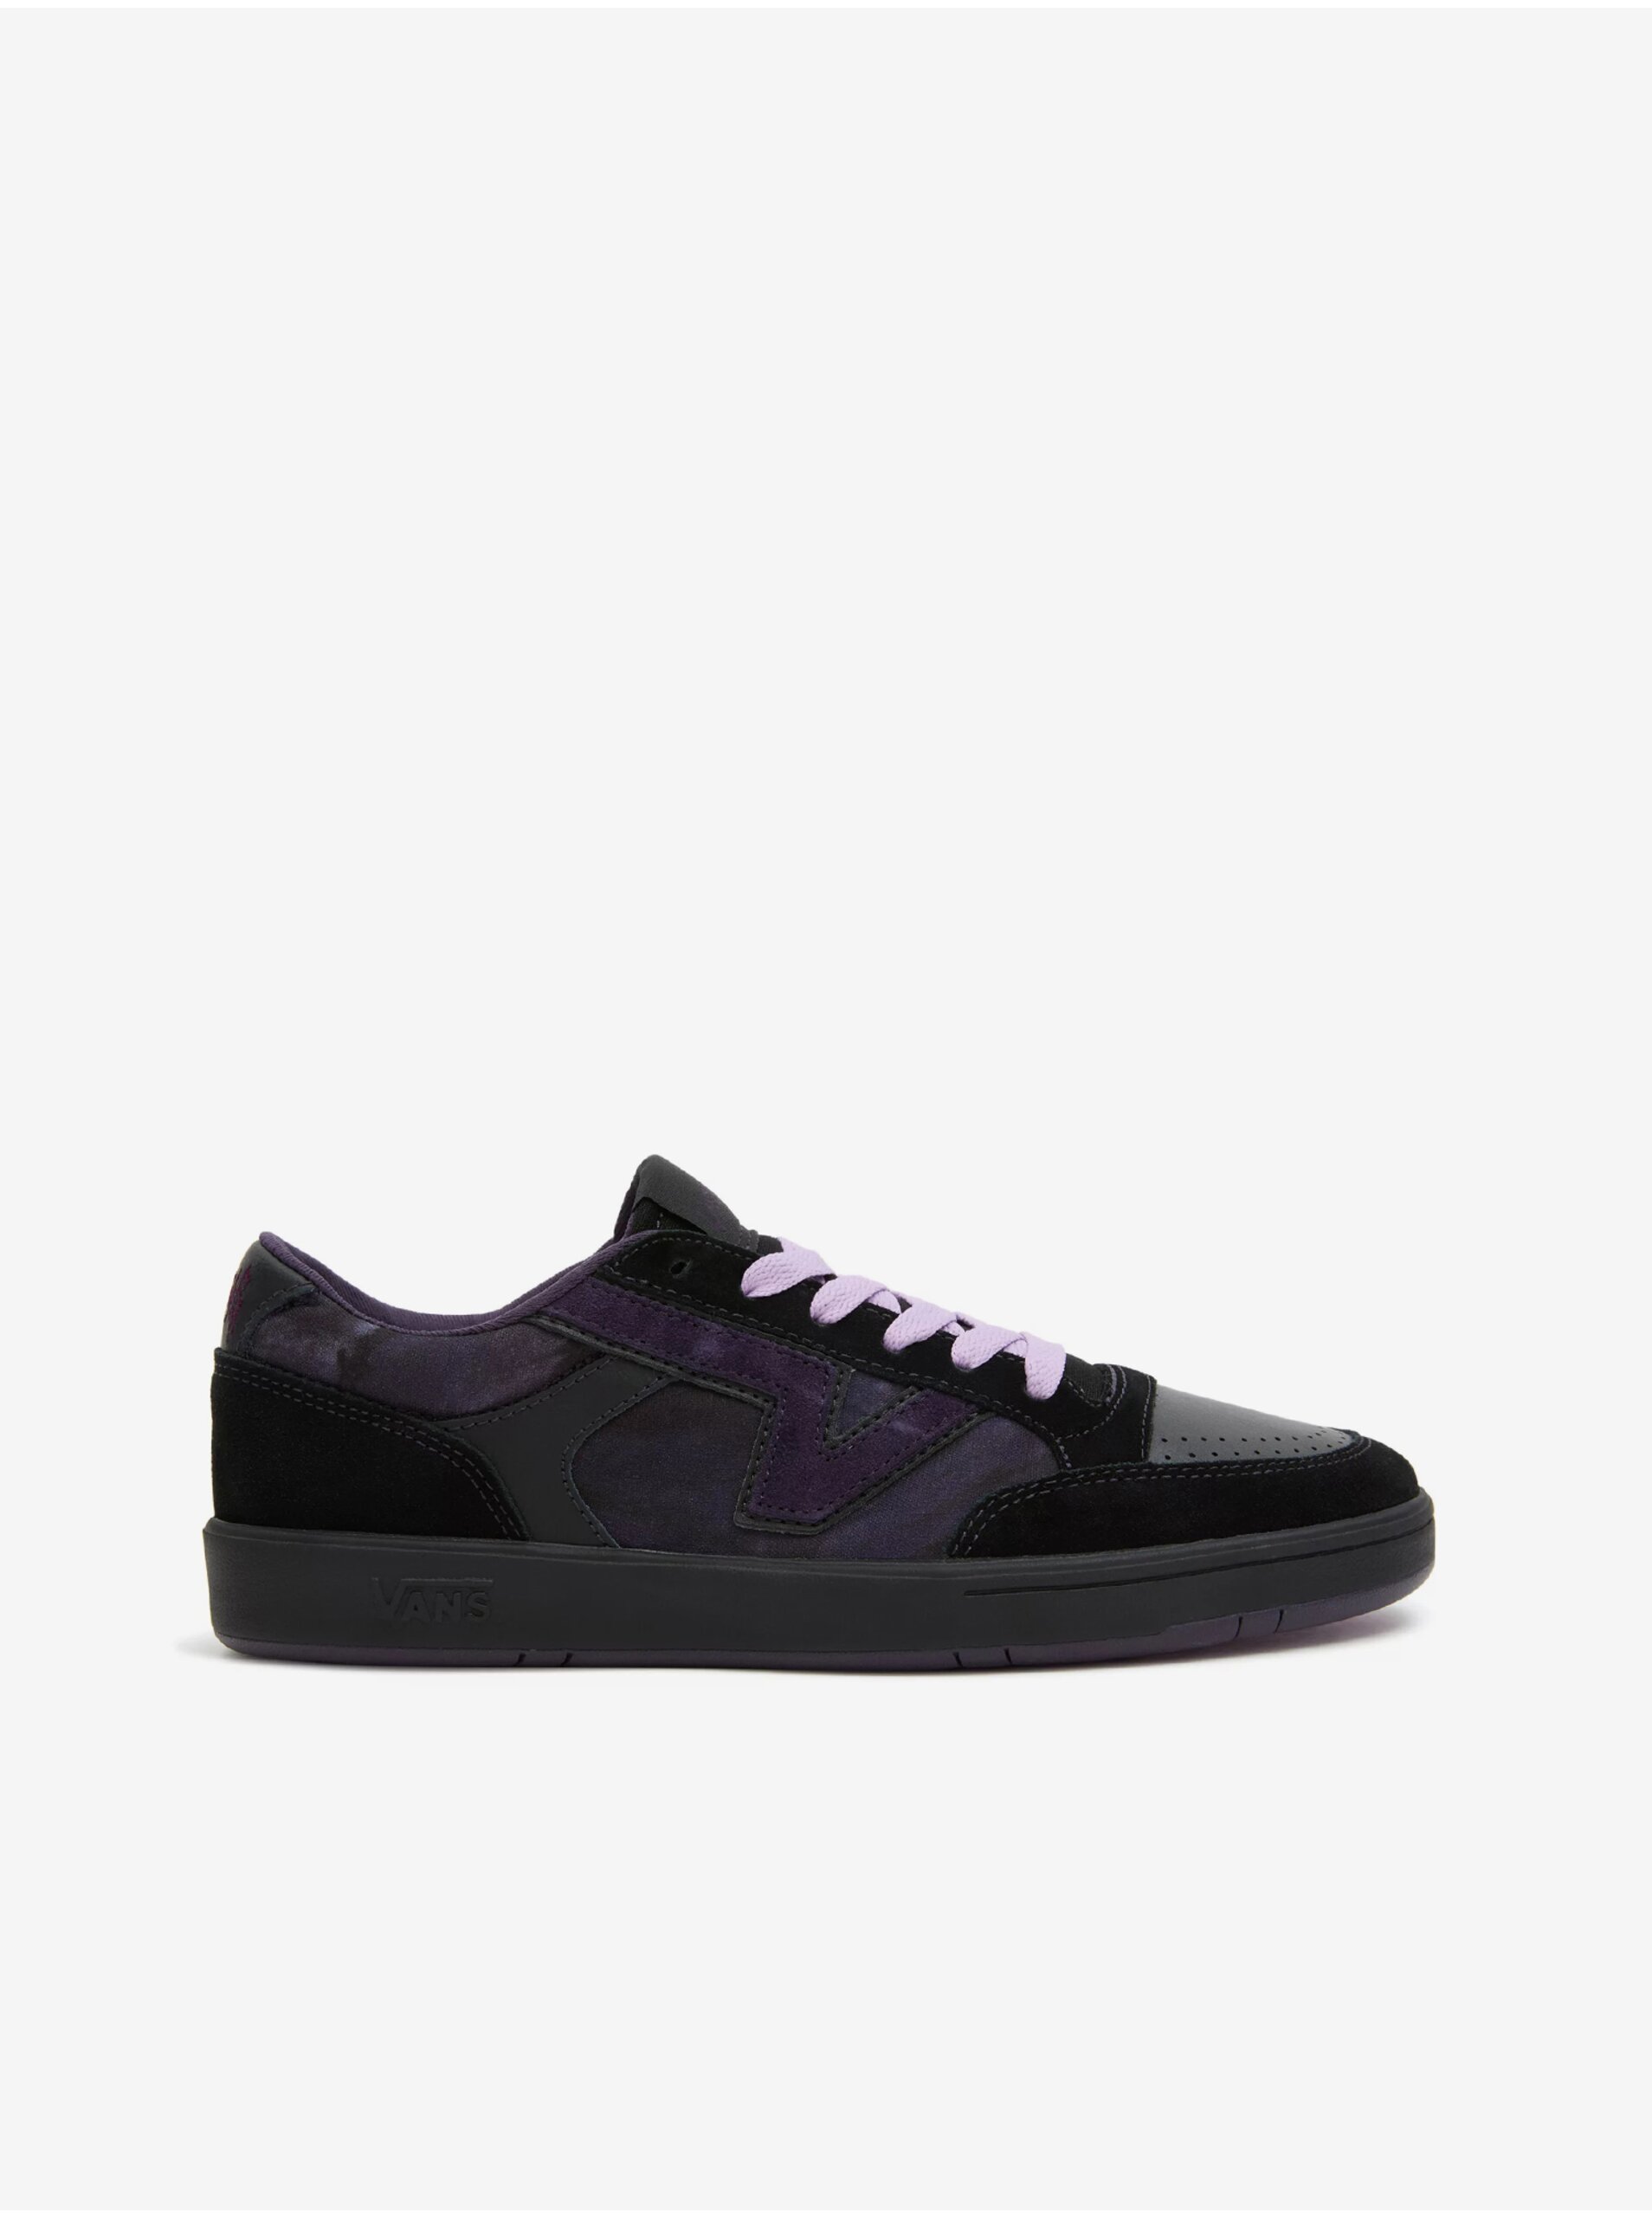 Purple-black men's sneakers with suede details VANS Lowland CC - Men's